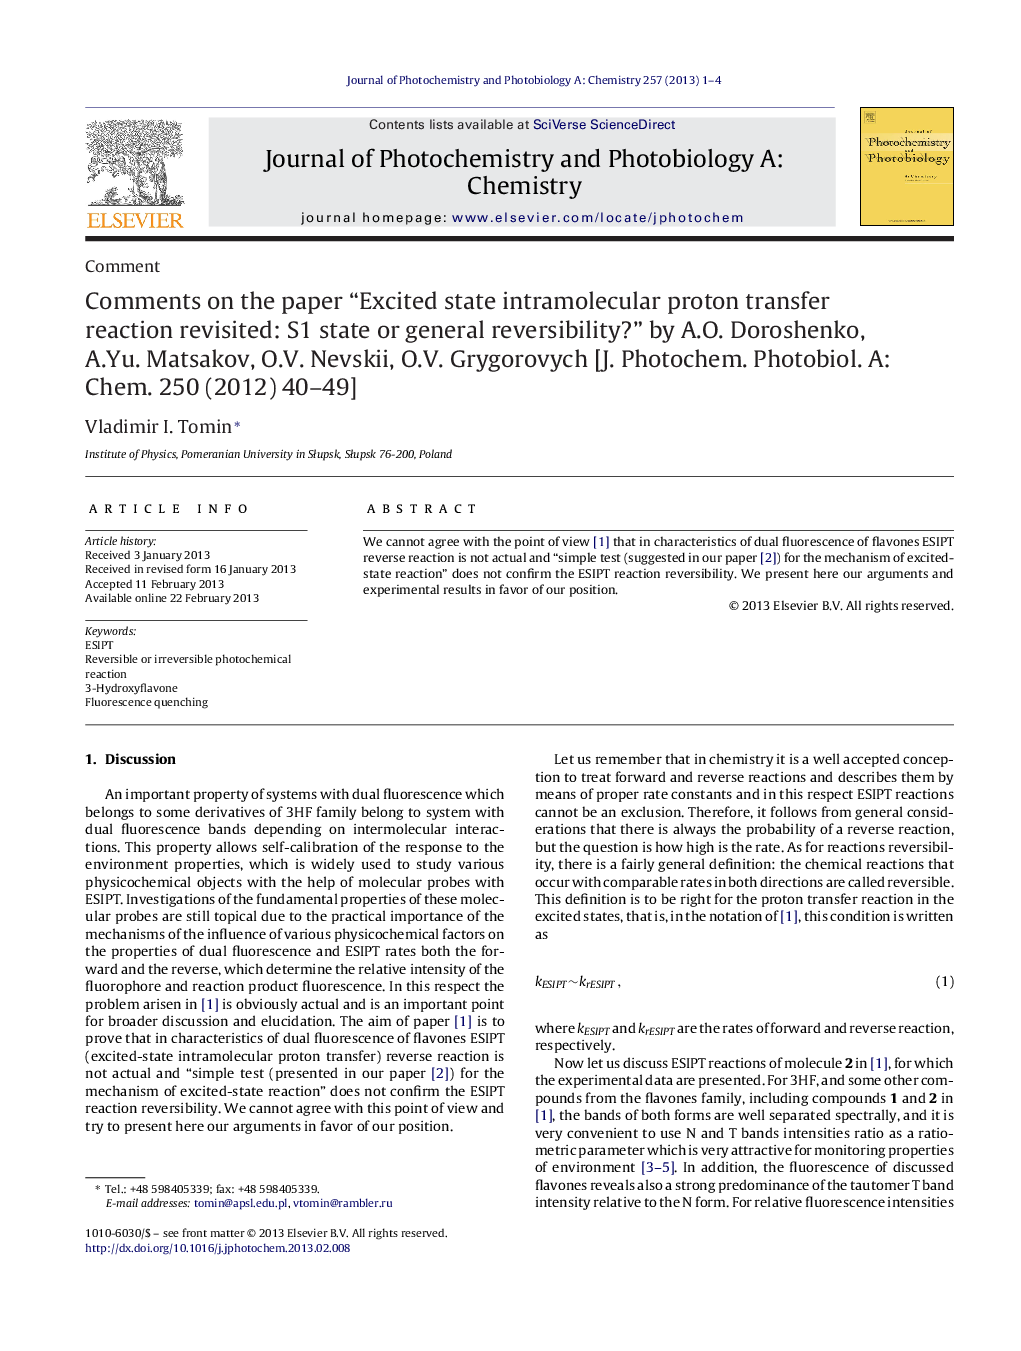 Comments on the paper “Excited state intramolecular proton transfer reaction revisited: S1 state or general reversibility?” by A.O. Doroshenko, A.Yu. Matsakov, O.V. Nevskii, O.V. Grygorovych [J. Photochem. Photobiol. A: Chem. 250 (2012) 40–49]